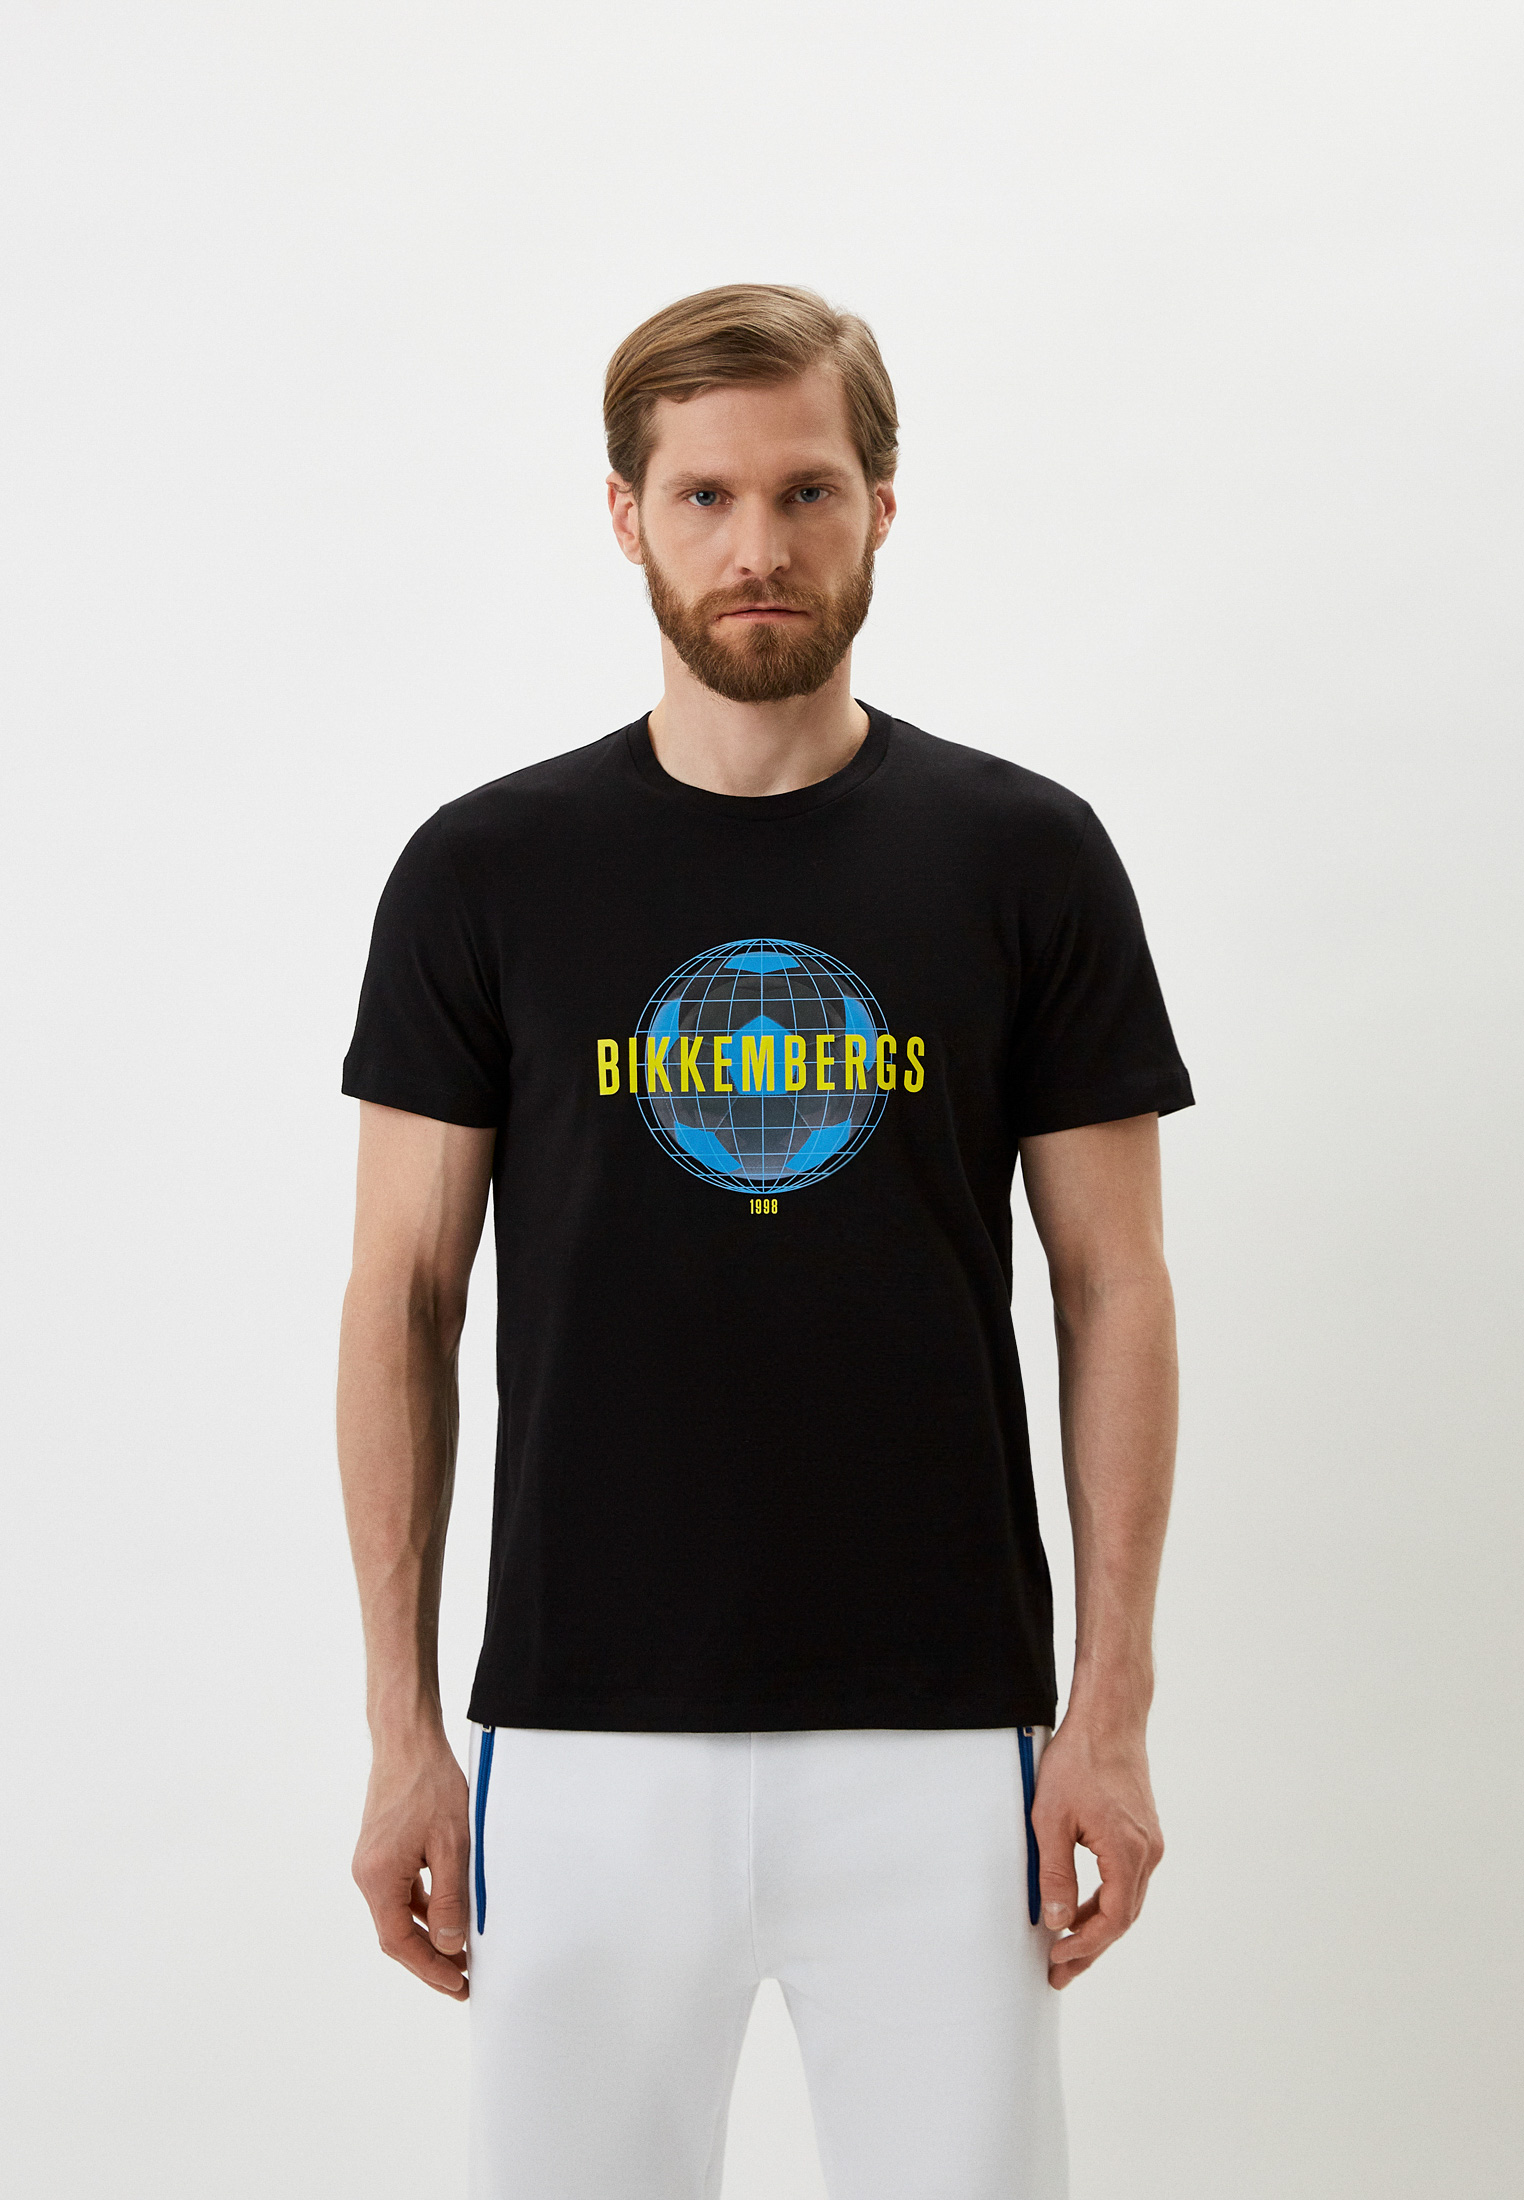 Мужская футболка Bikkembergs (Биккембергс) C 4 101 07 E 2231